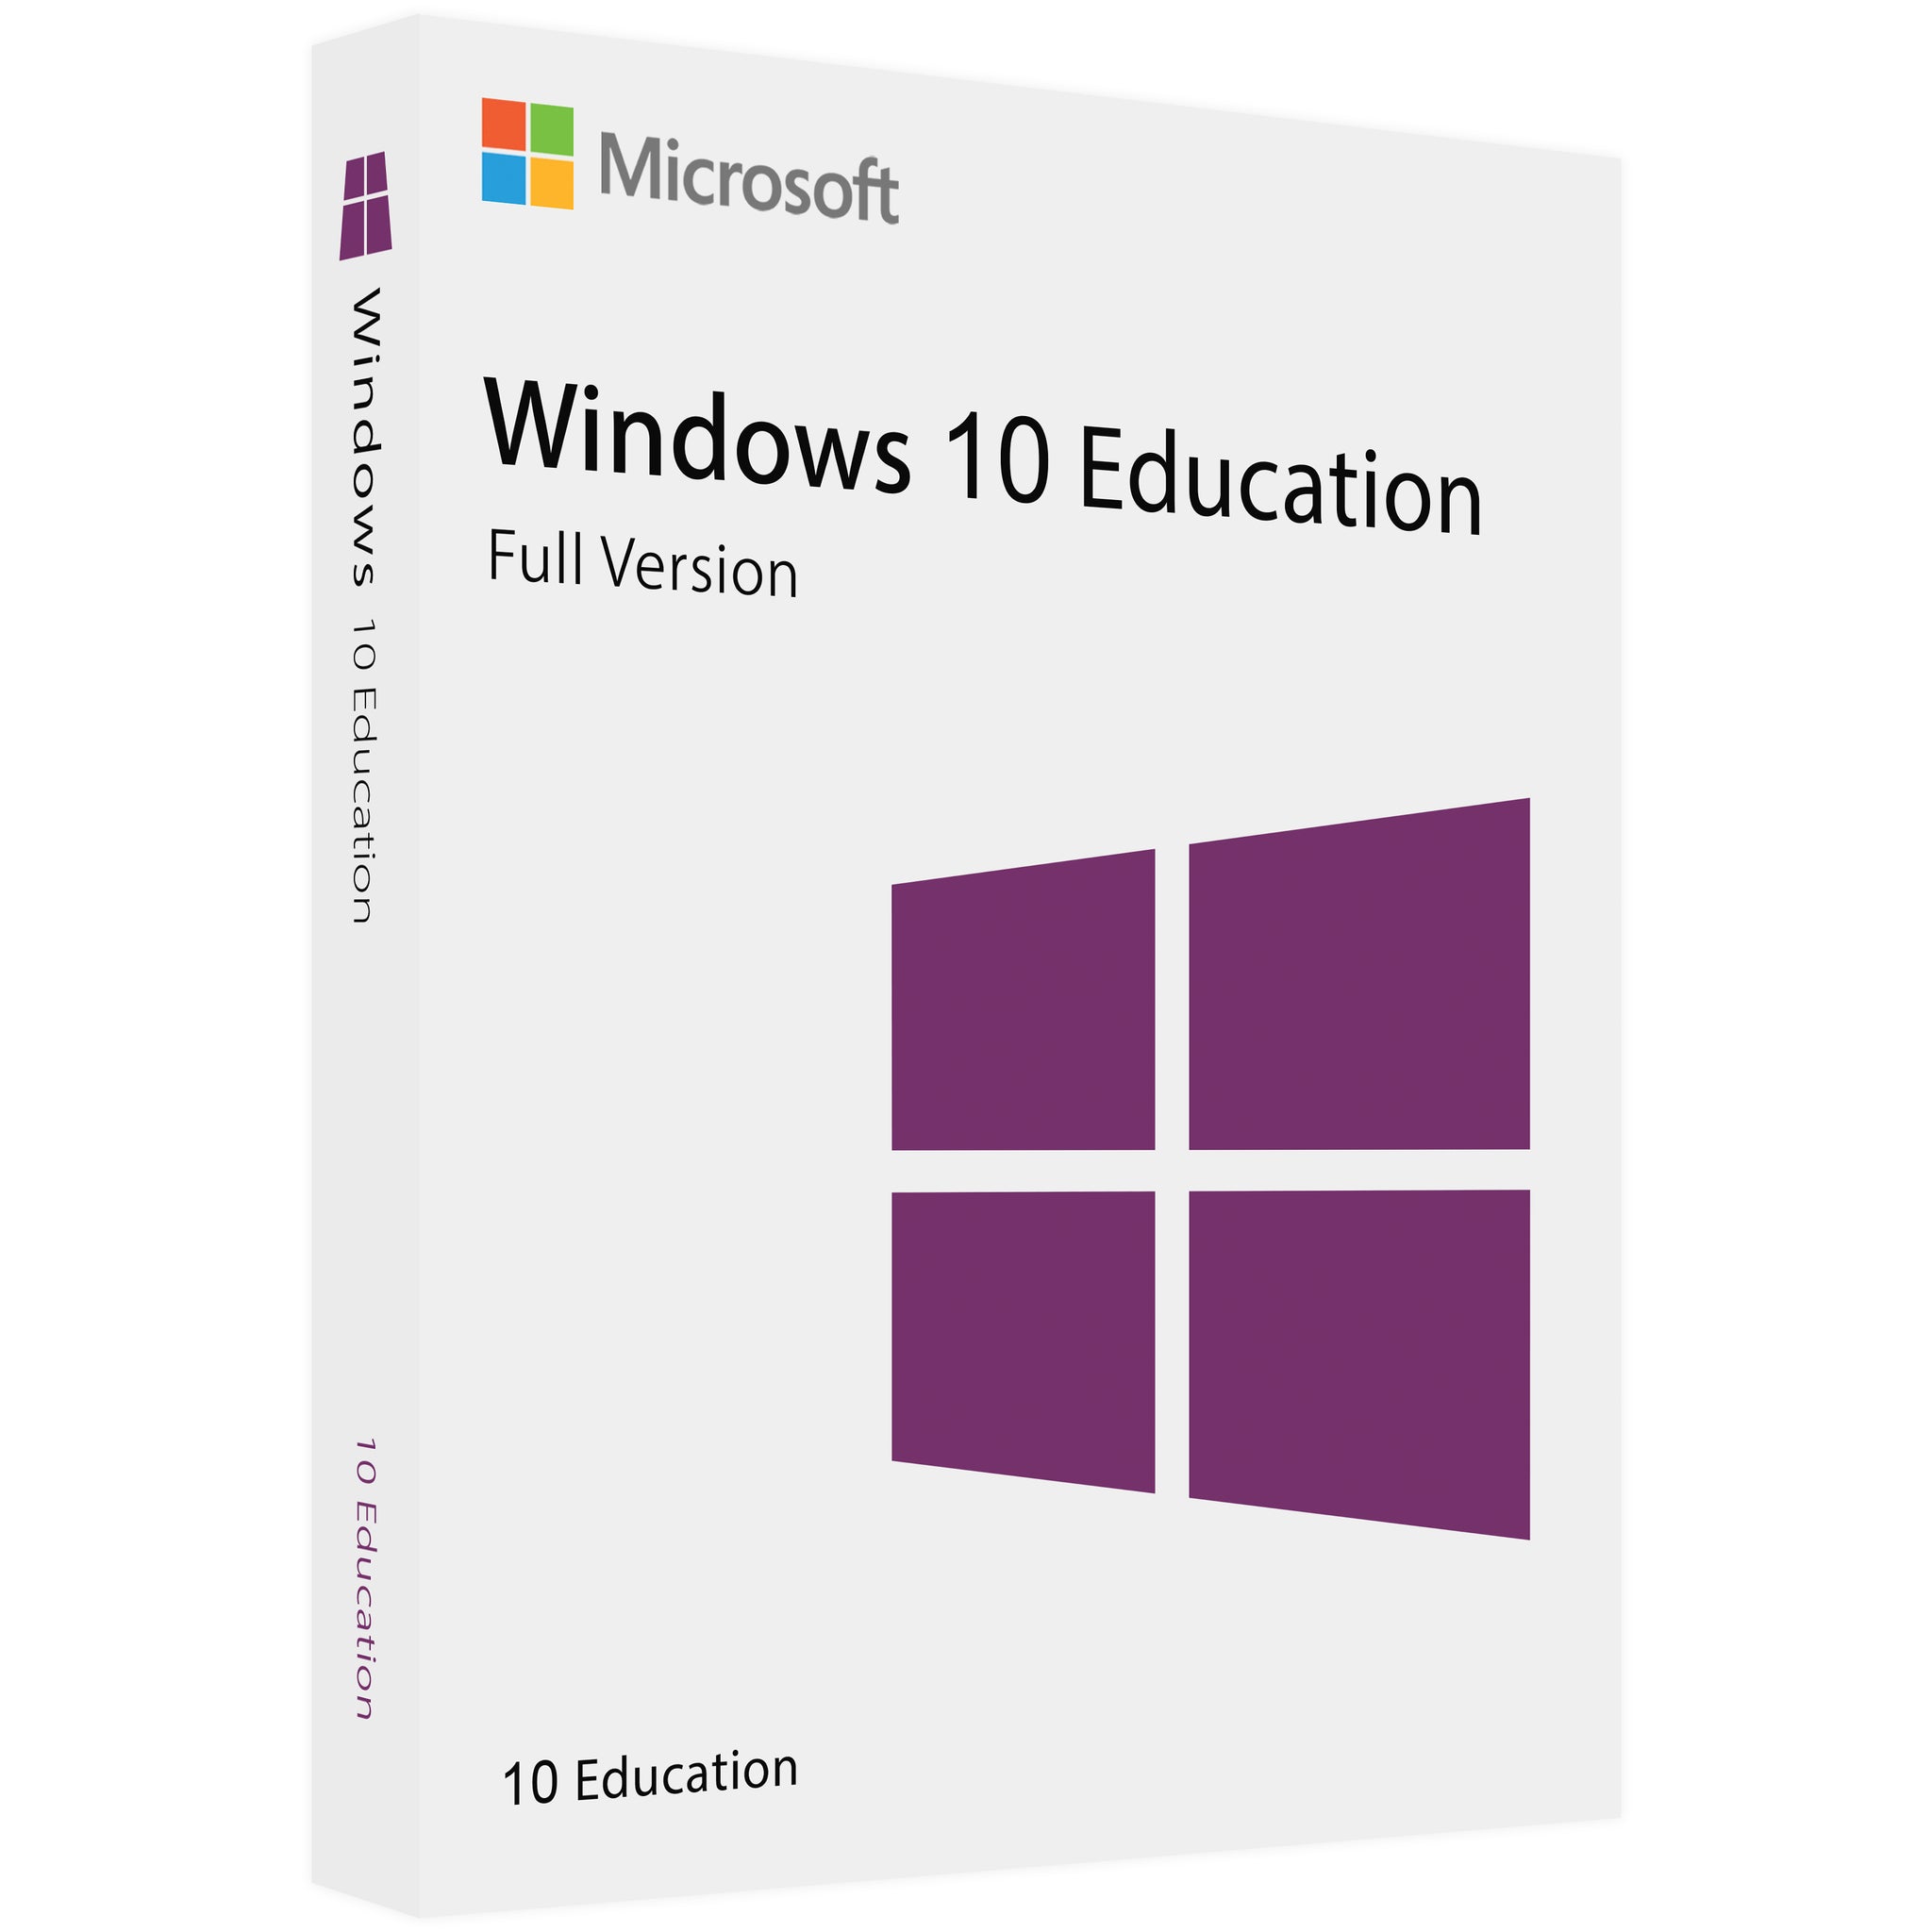 Microsoft Windows 10 Education - Lifetime License Key for 1 PC